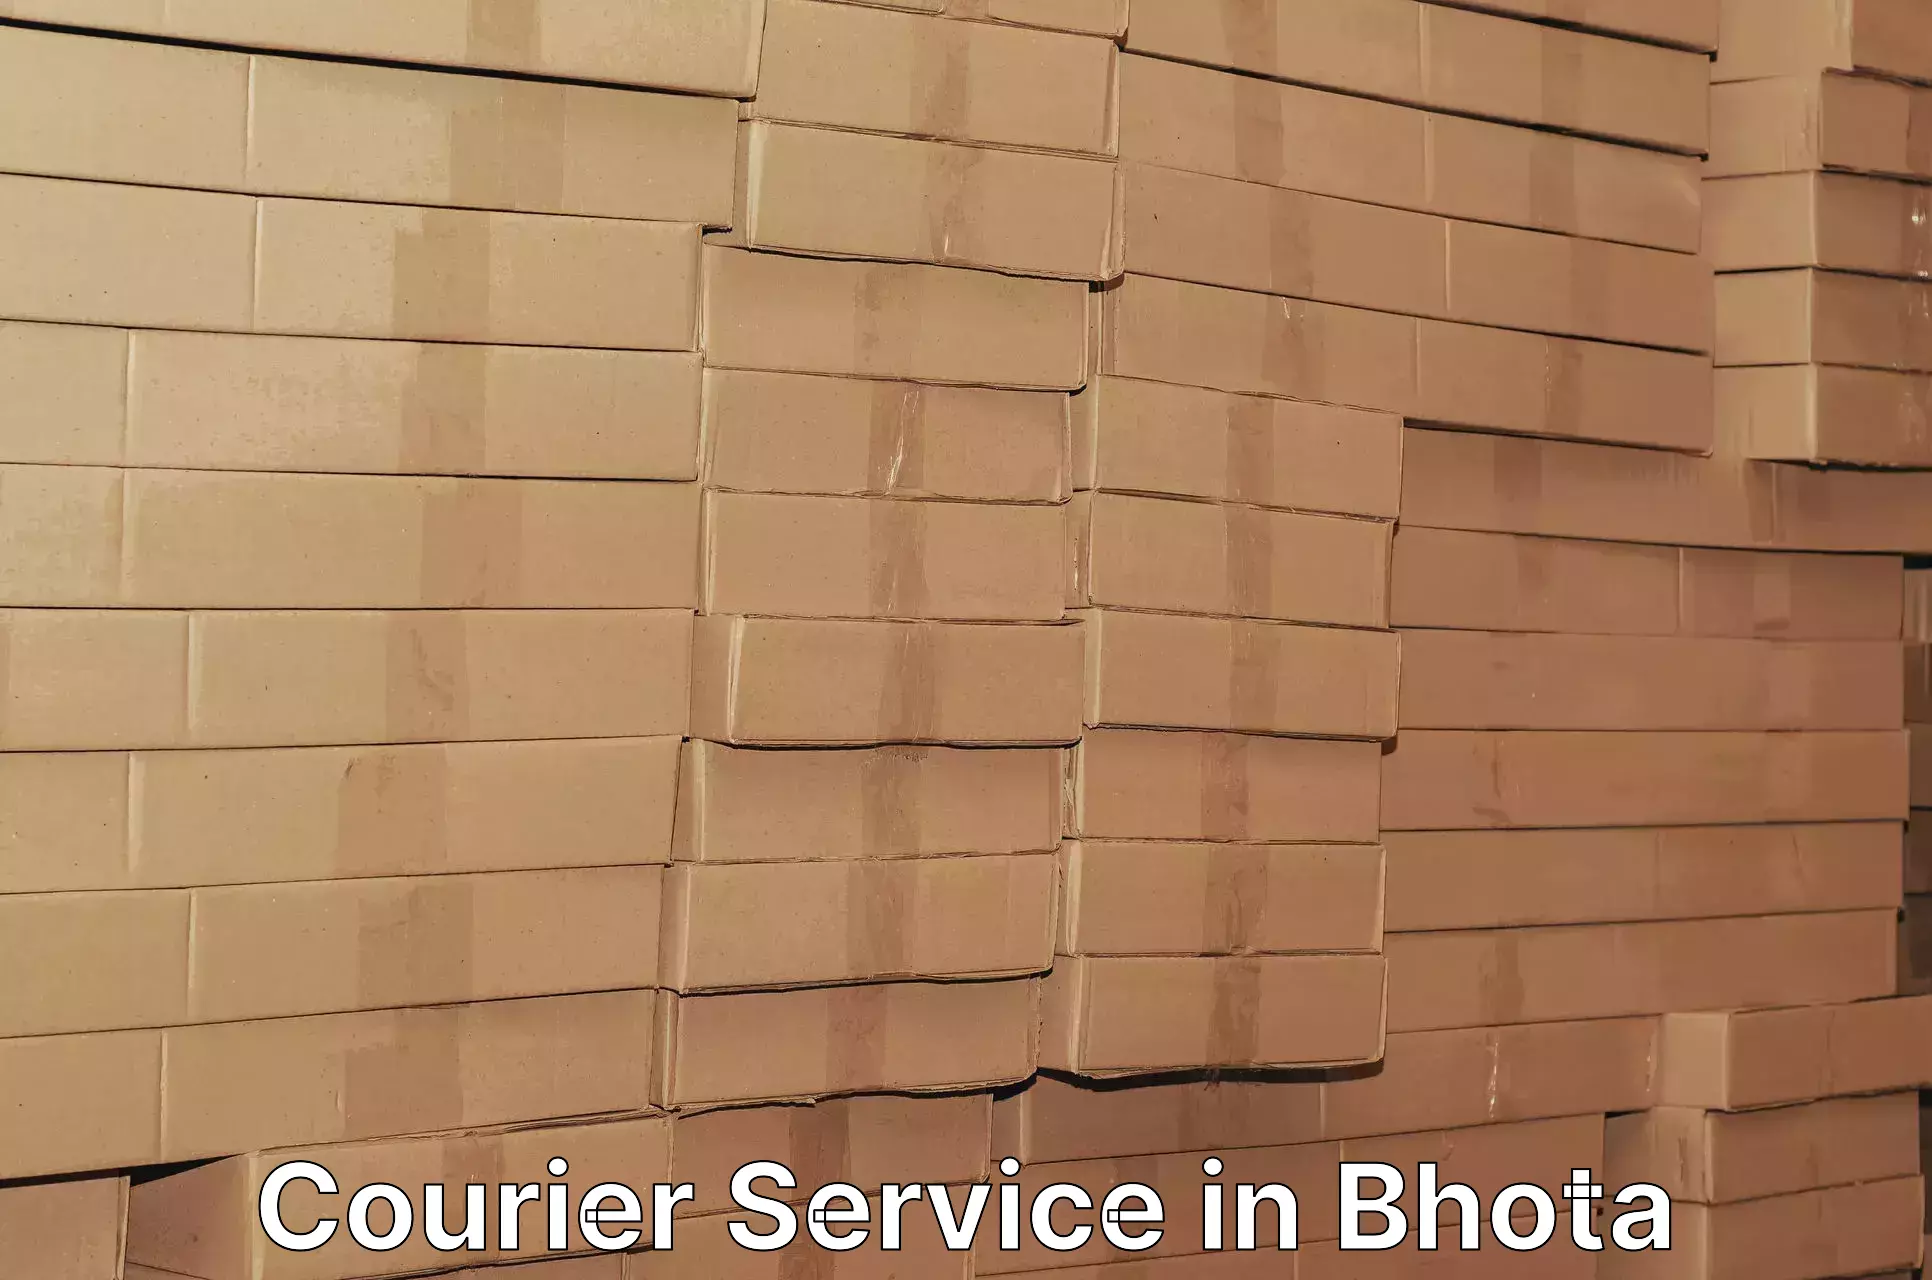 Advanced logistics management in Bhota